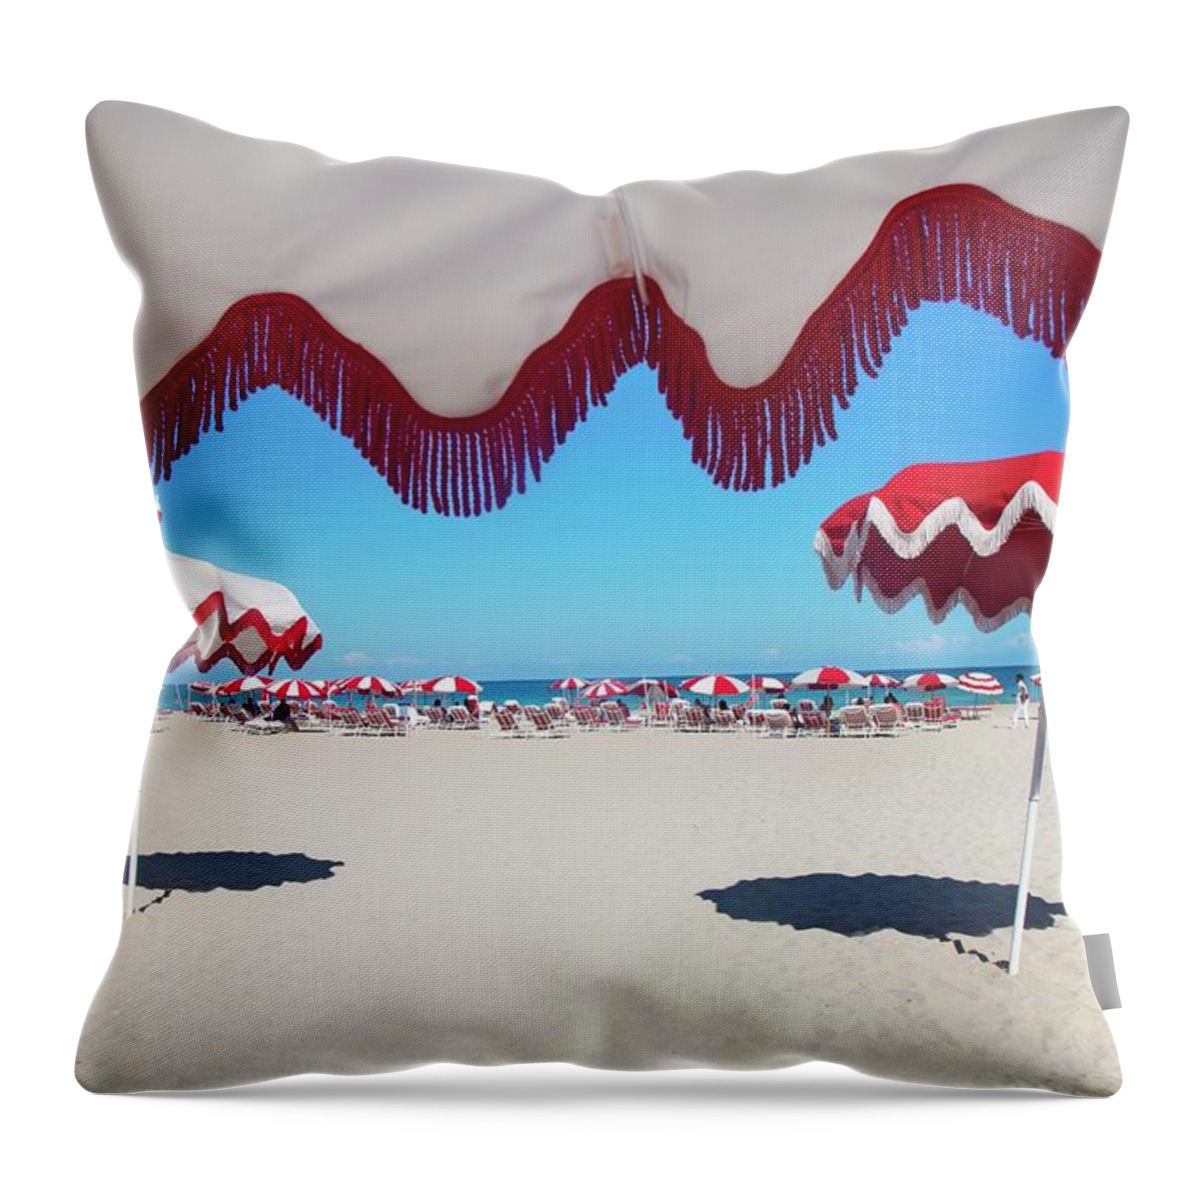 Estock Throw Pillow featuring the digital art Beach Umbrellas In South Beach Miami by Claudia Uripos